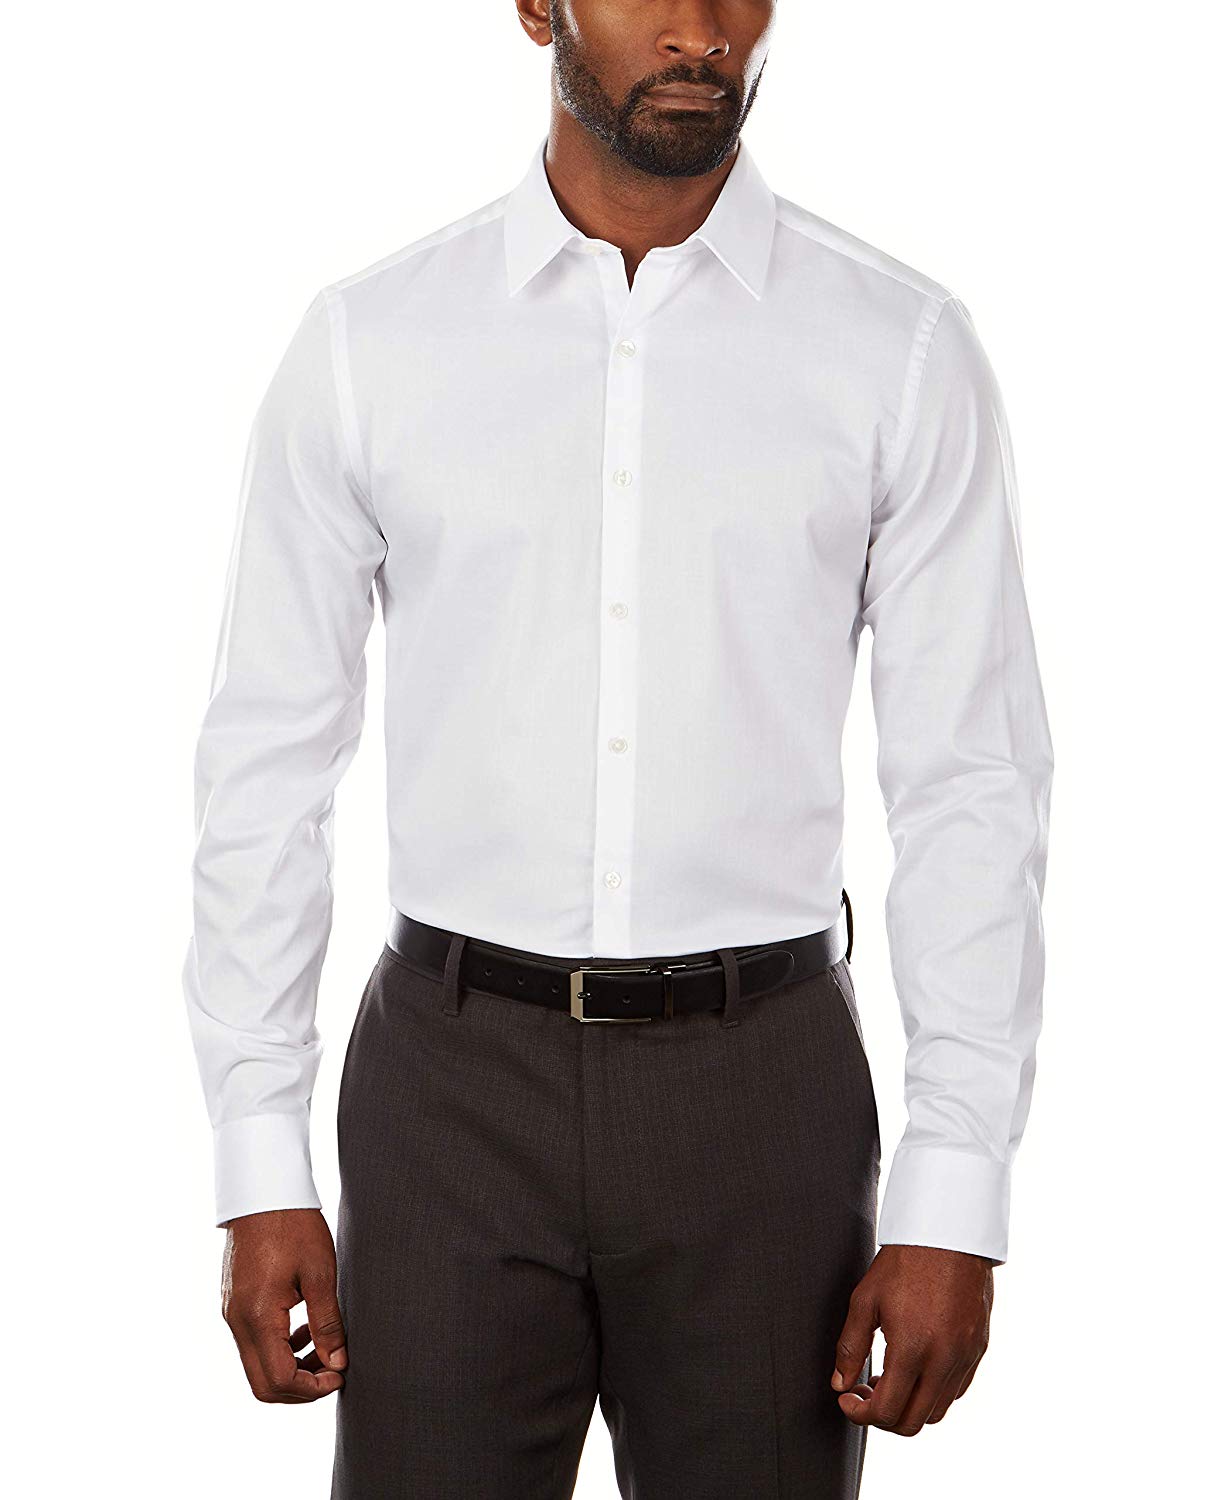 Van Heusen Men's Dress Shirt Slim Fit Flex Collar Stretch, White, Size ...